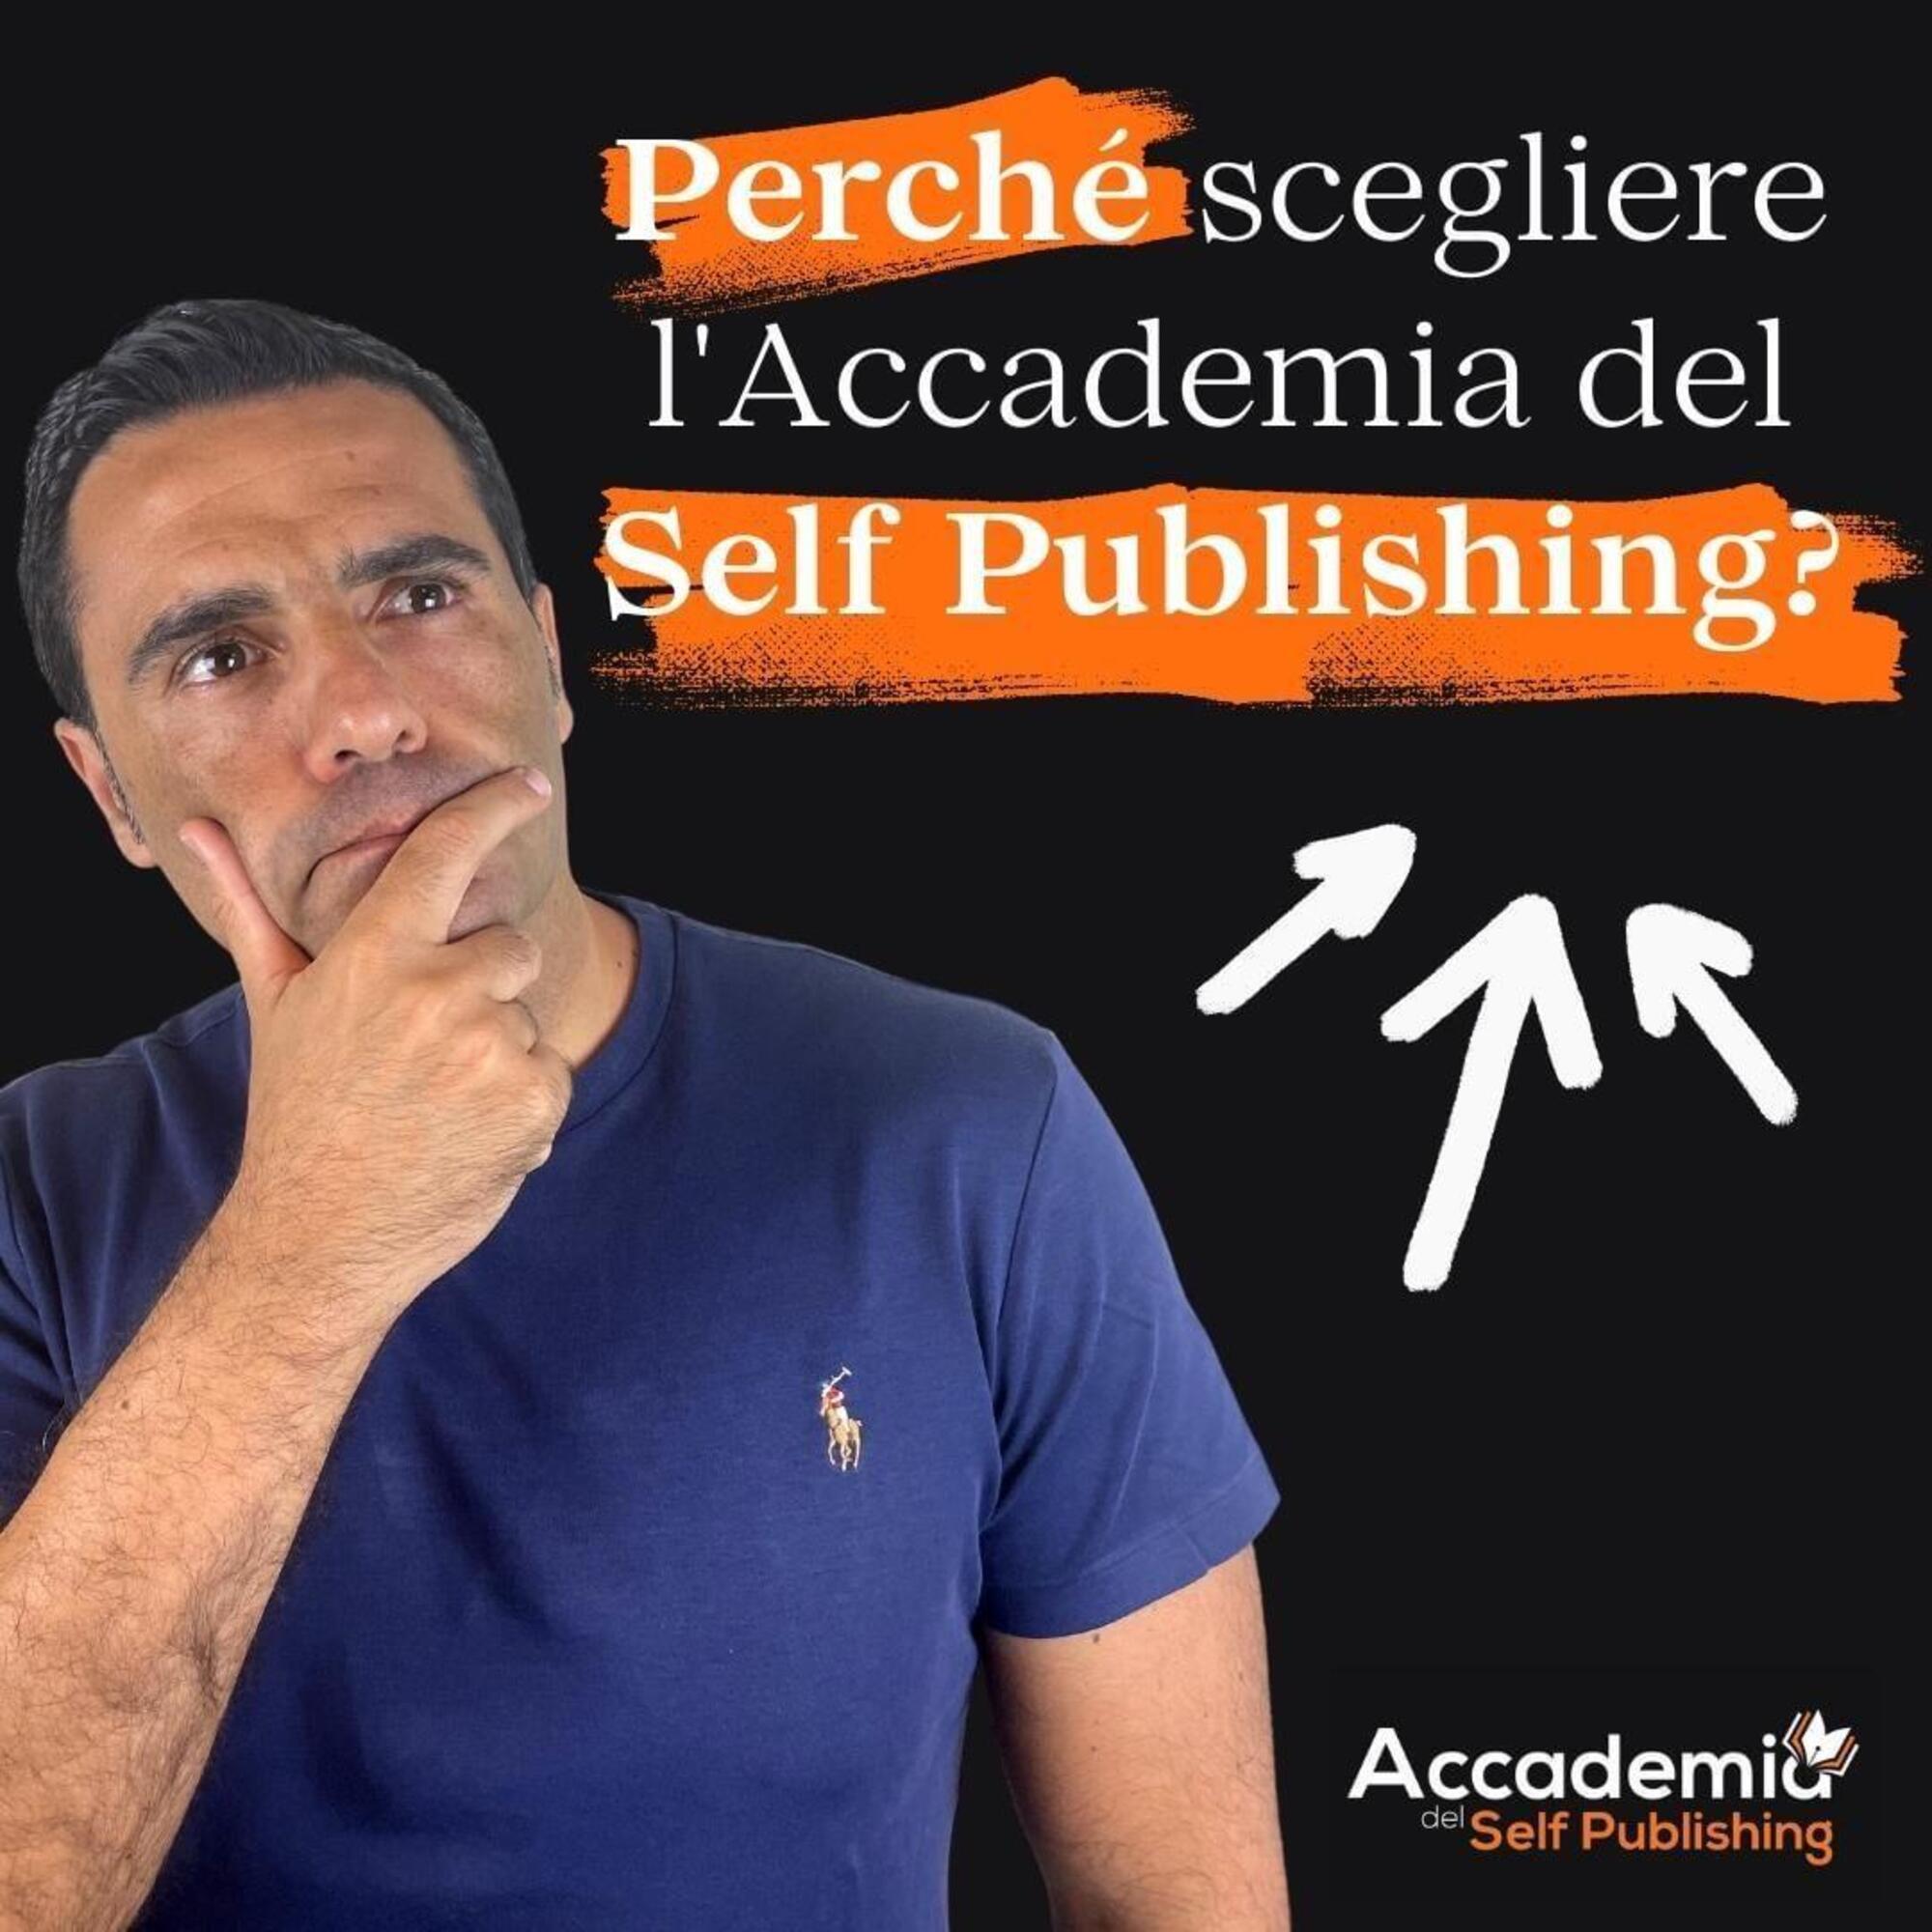 Alessandro Arnao, fuffa guru del self publishing